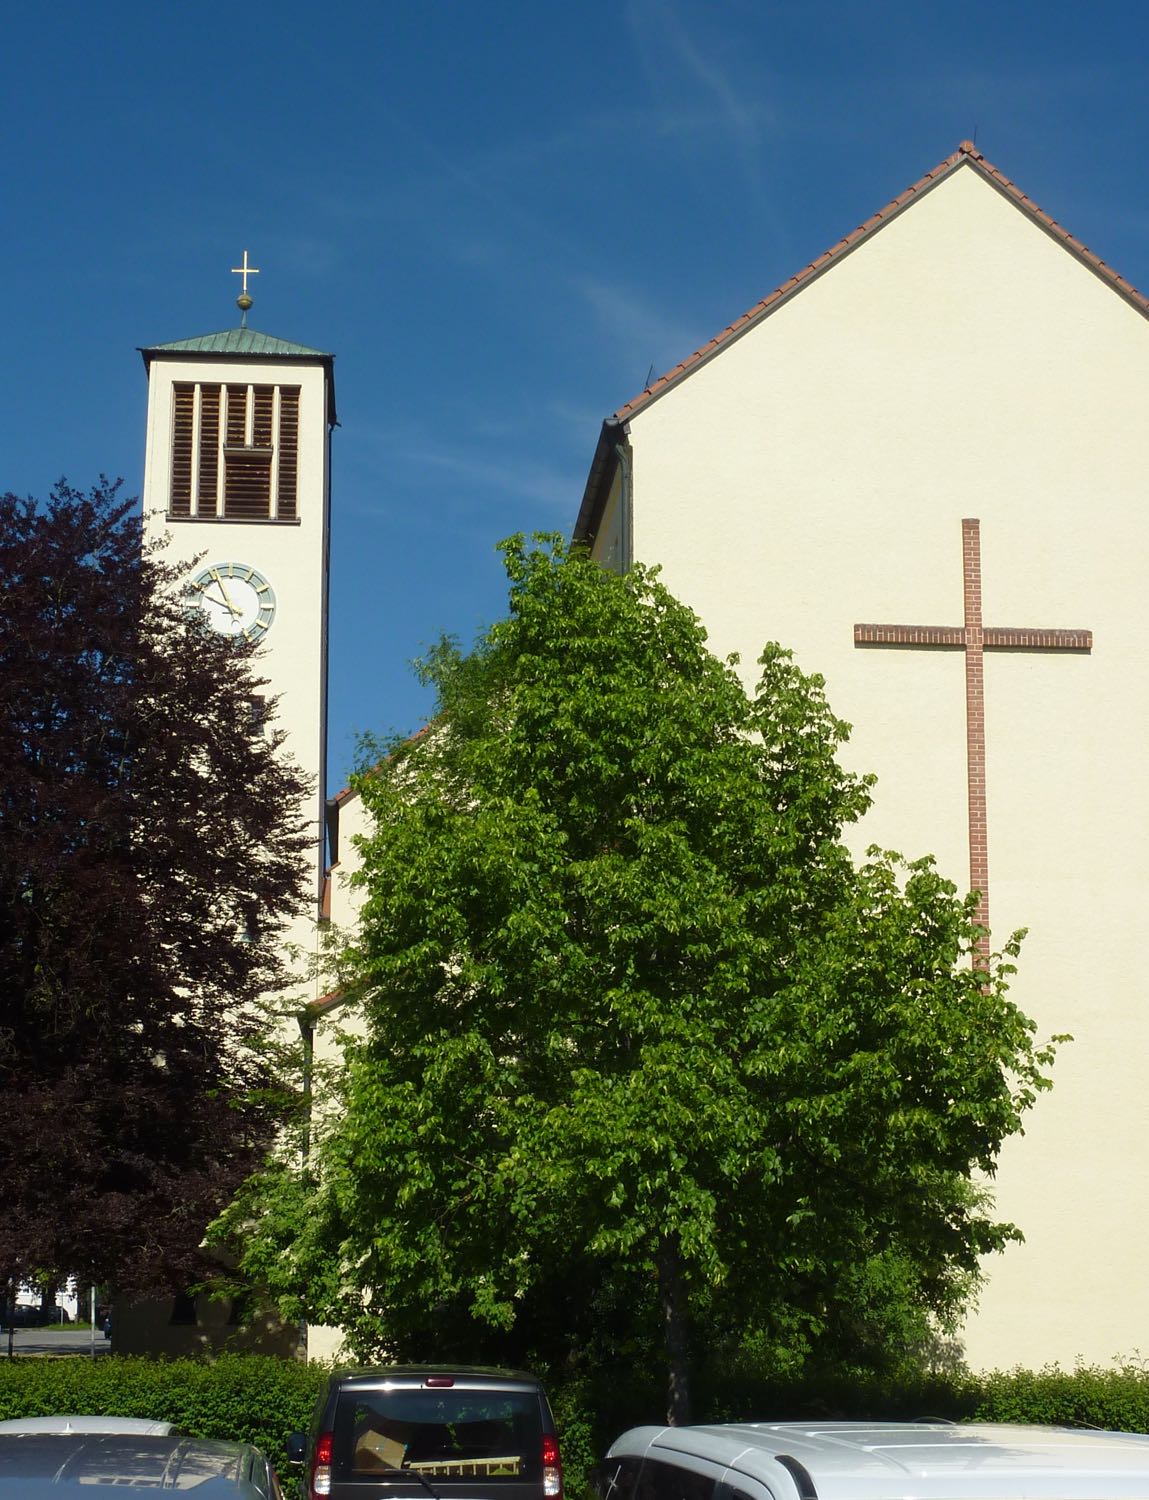 Pfarrkirche St. Barbara